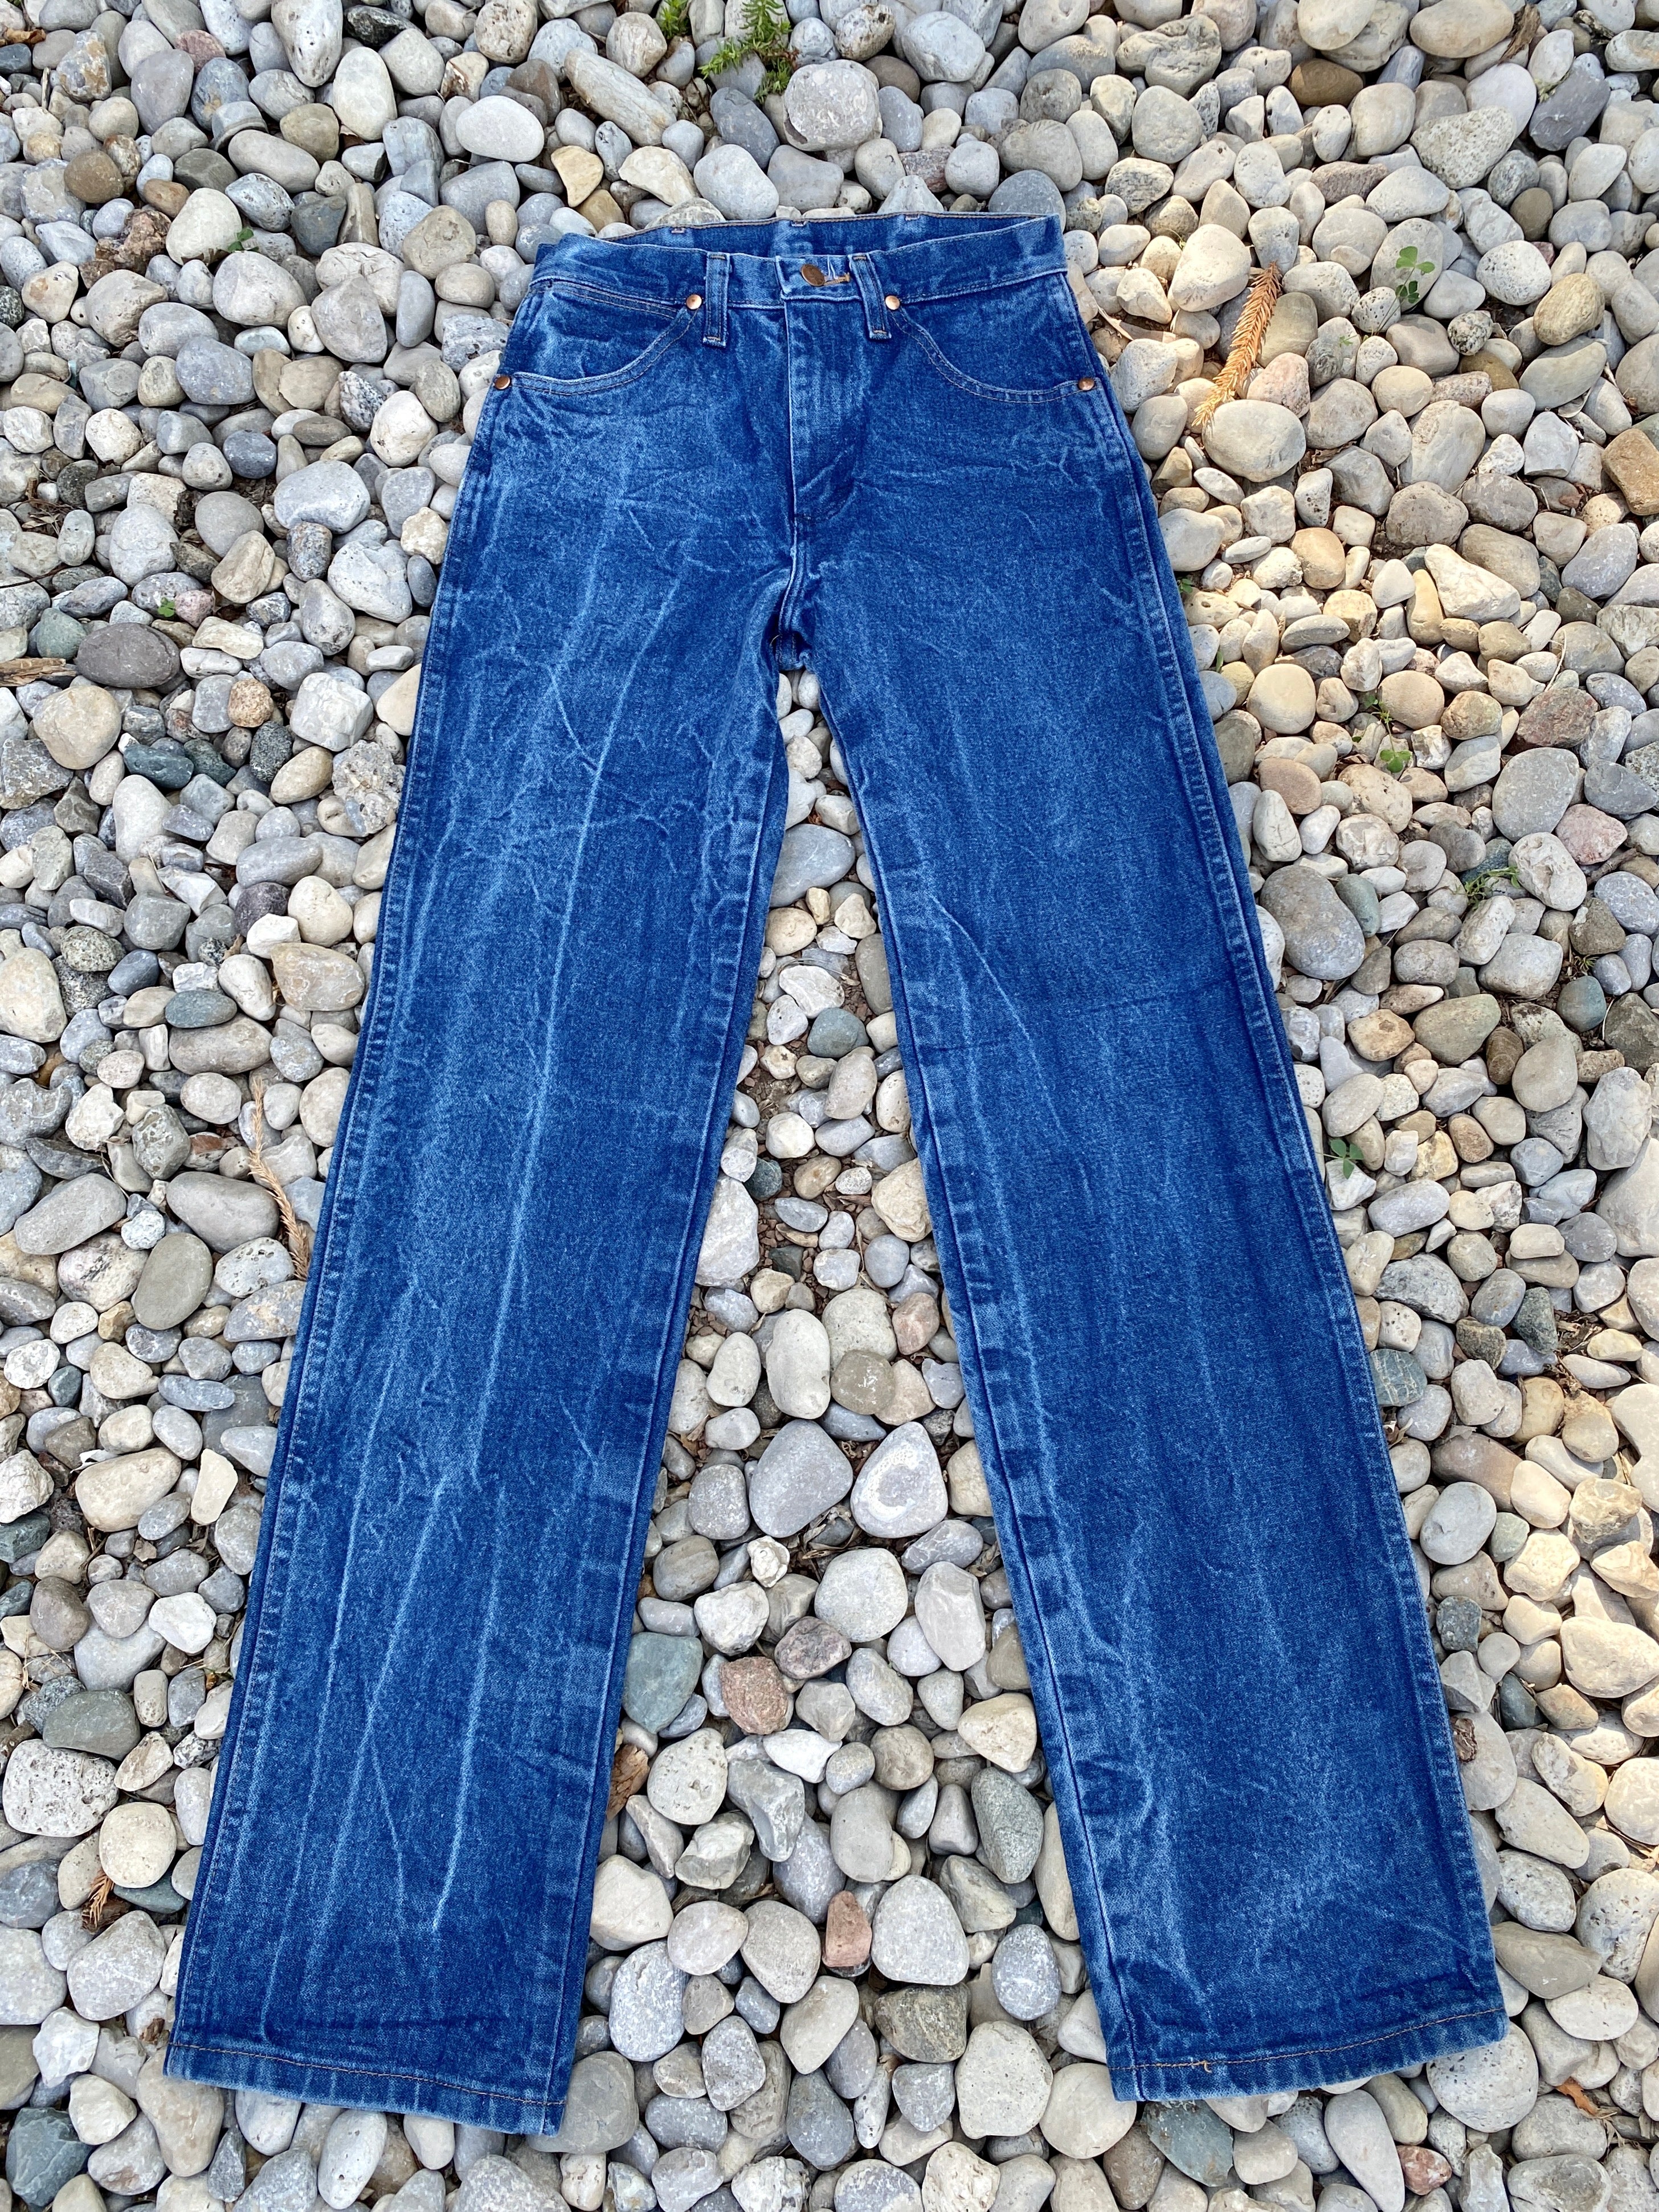 Vintage Wrangler Sun Distressed Dark Wash Jeans size 26